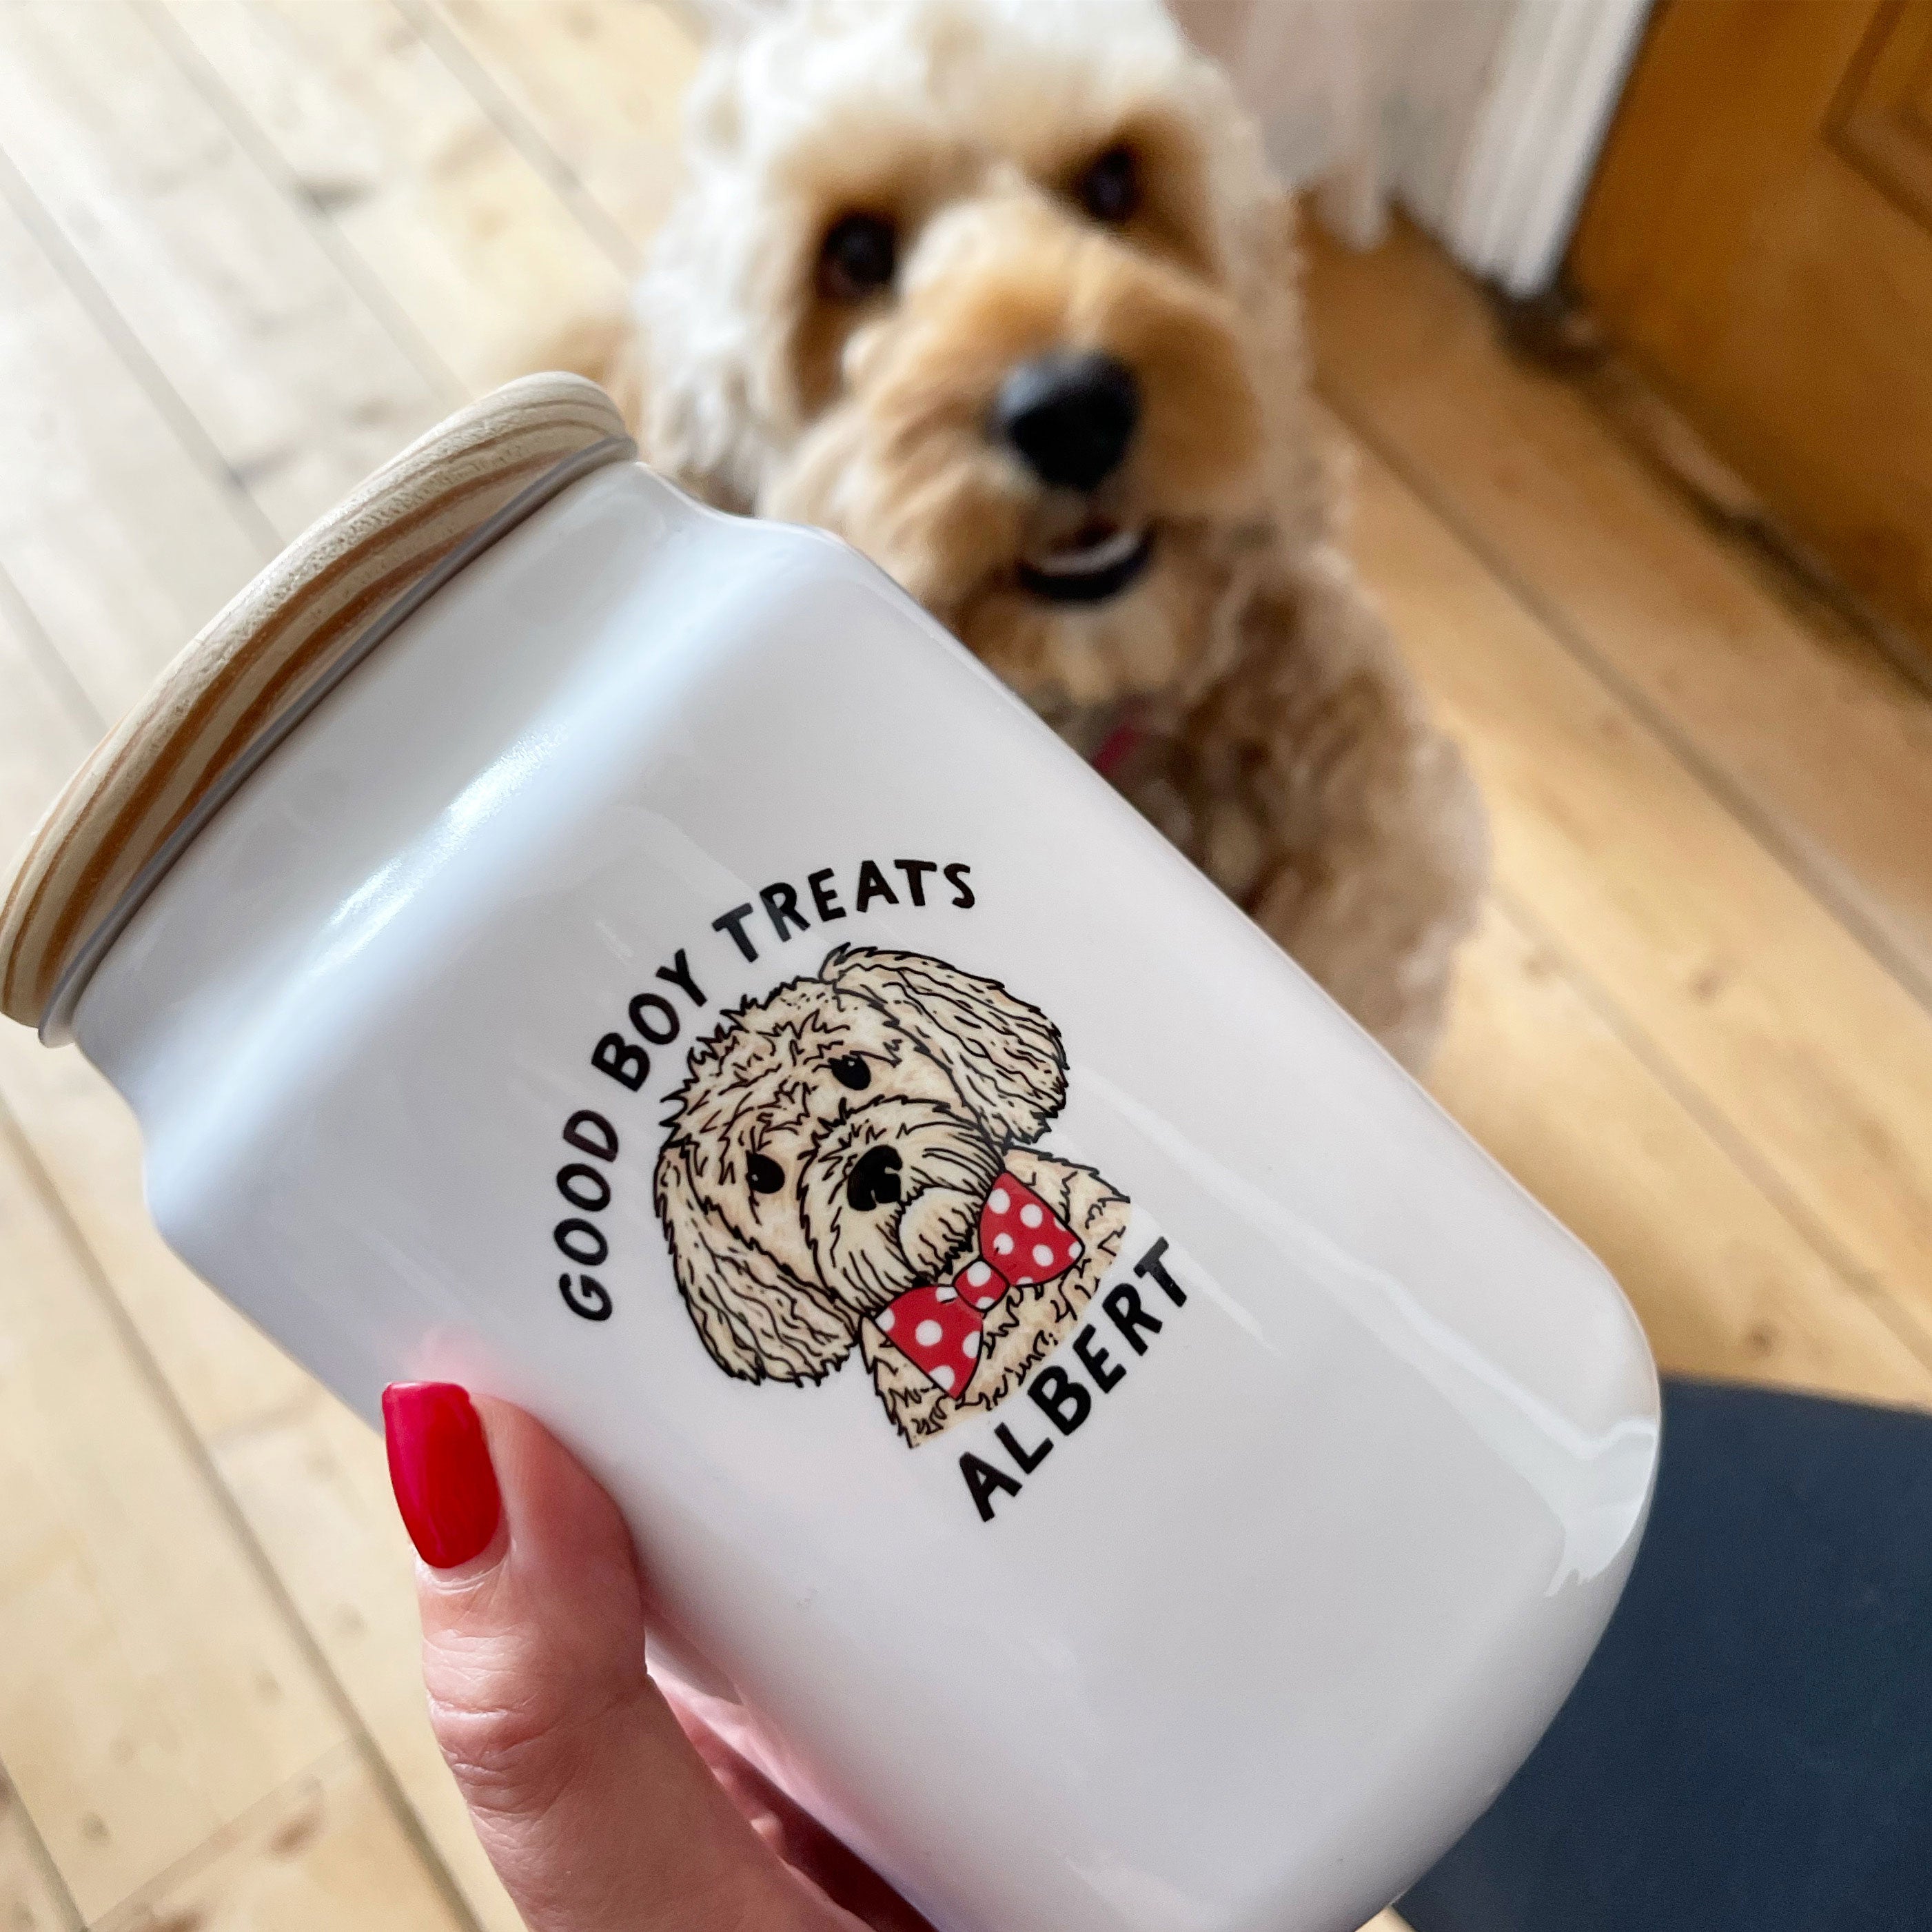 Personalised Good Dog Treat Jar